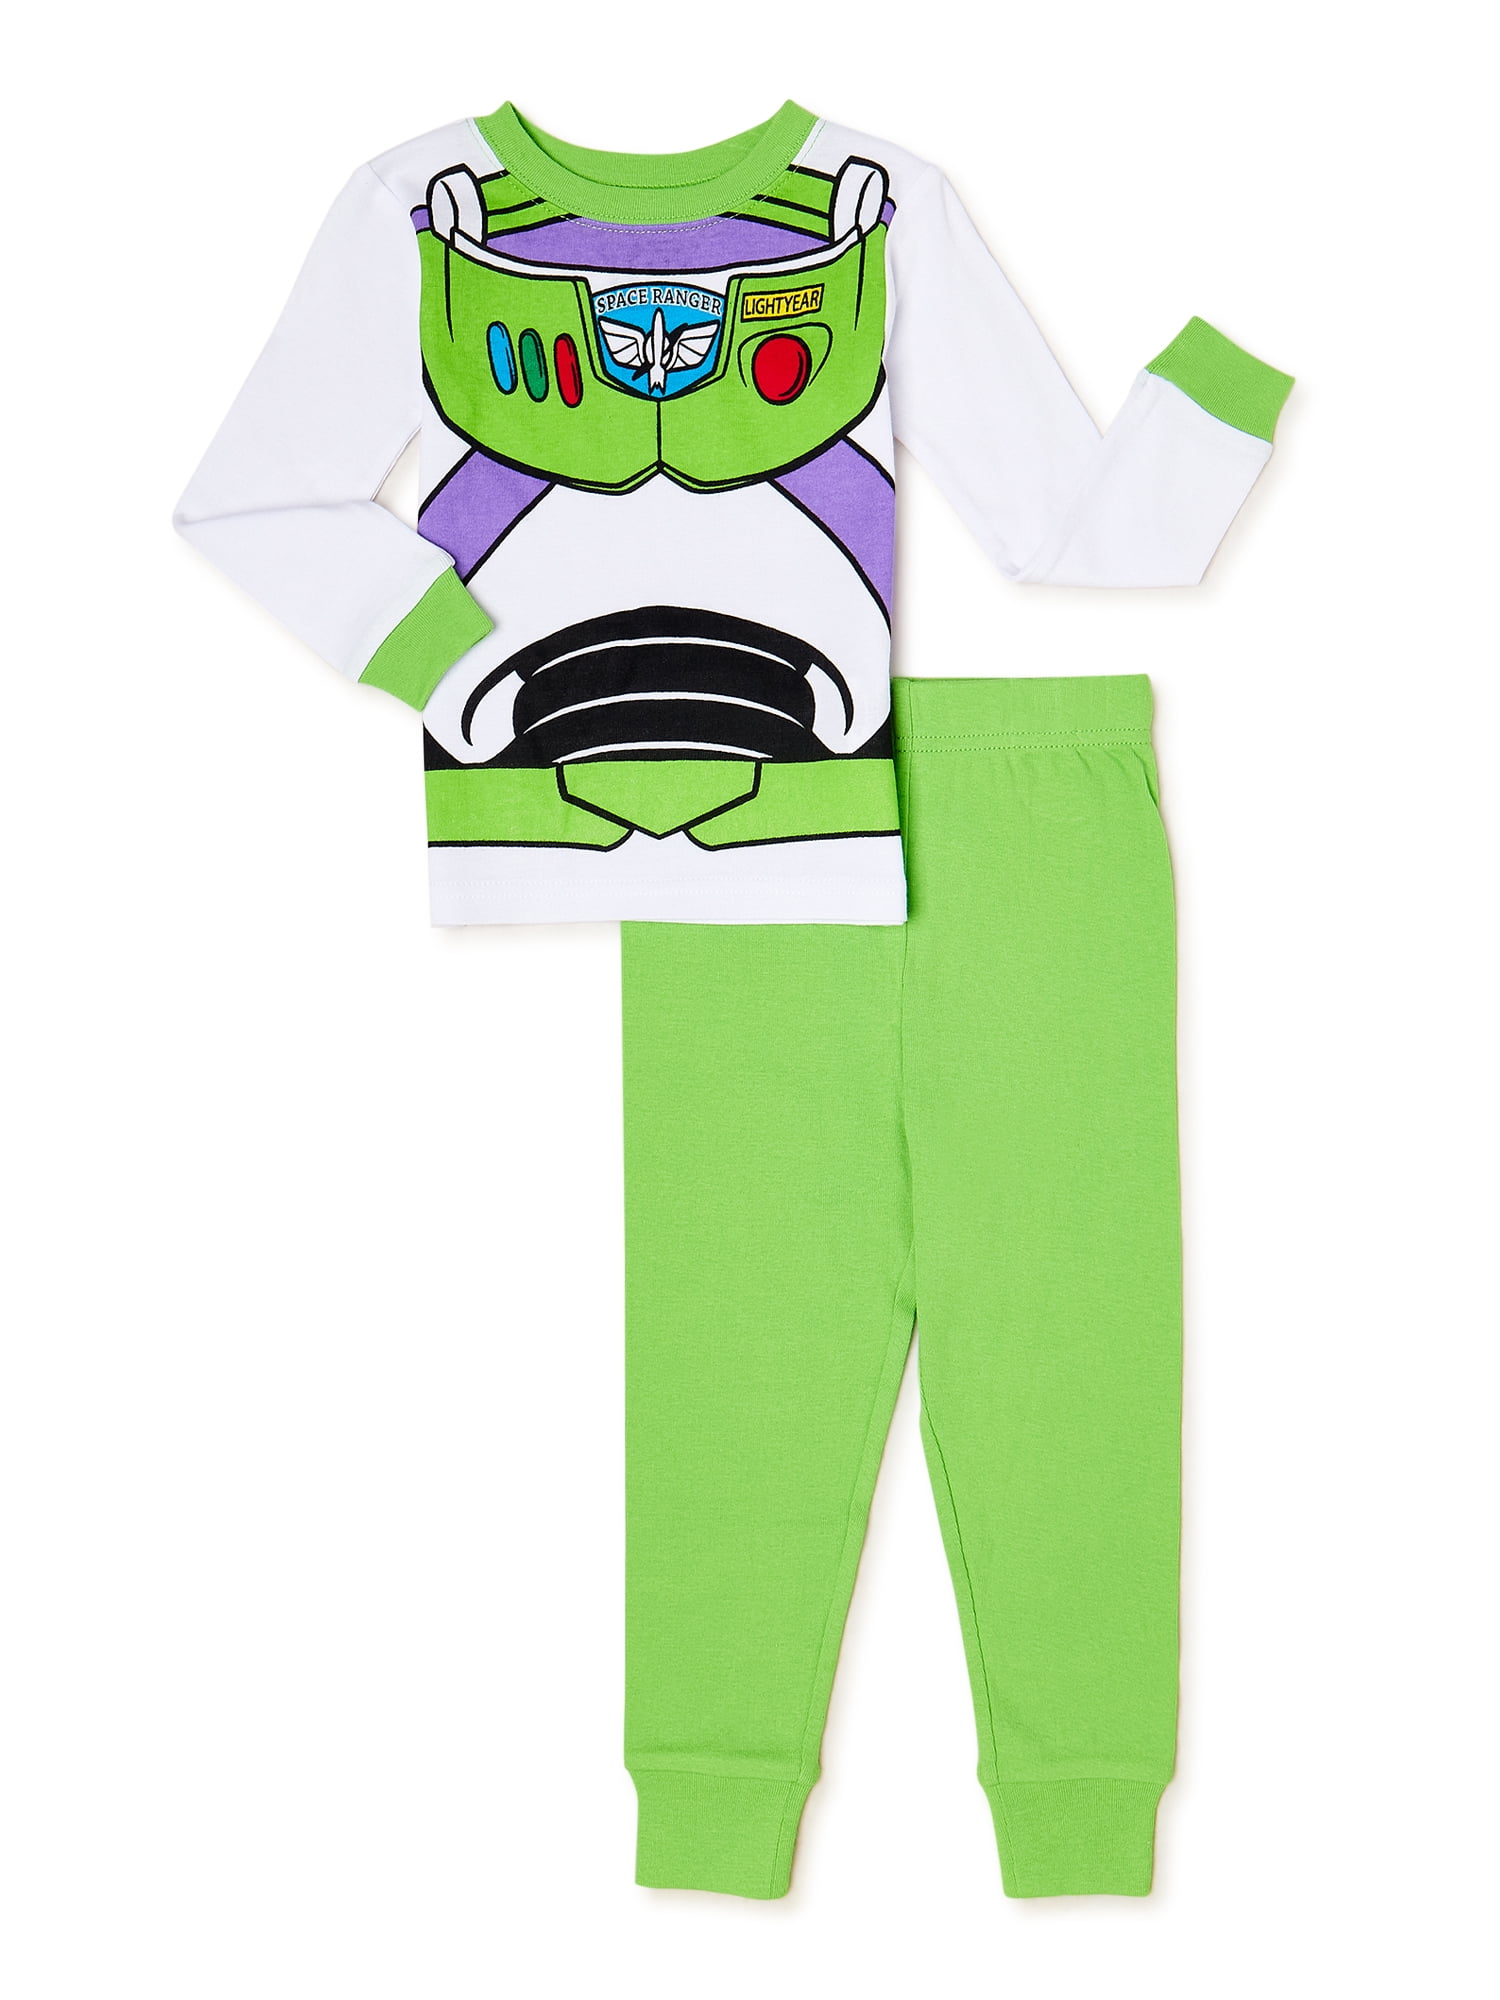 Disney Pixar Toy Story Toddler Boys Long Sleeve Top and Pants 2-Piece Pajama Set, Sizes 2T-5T